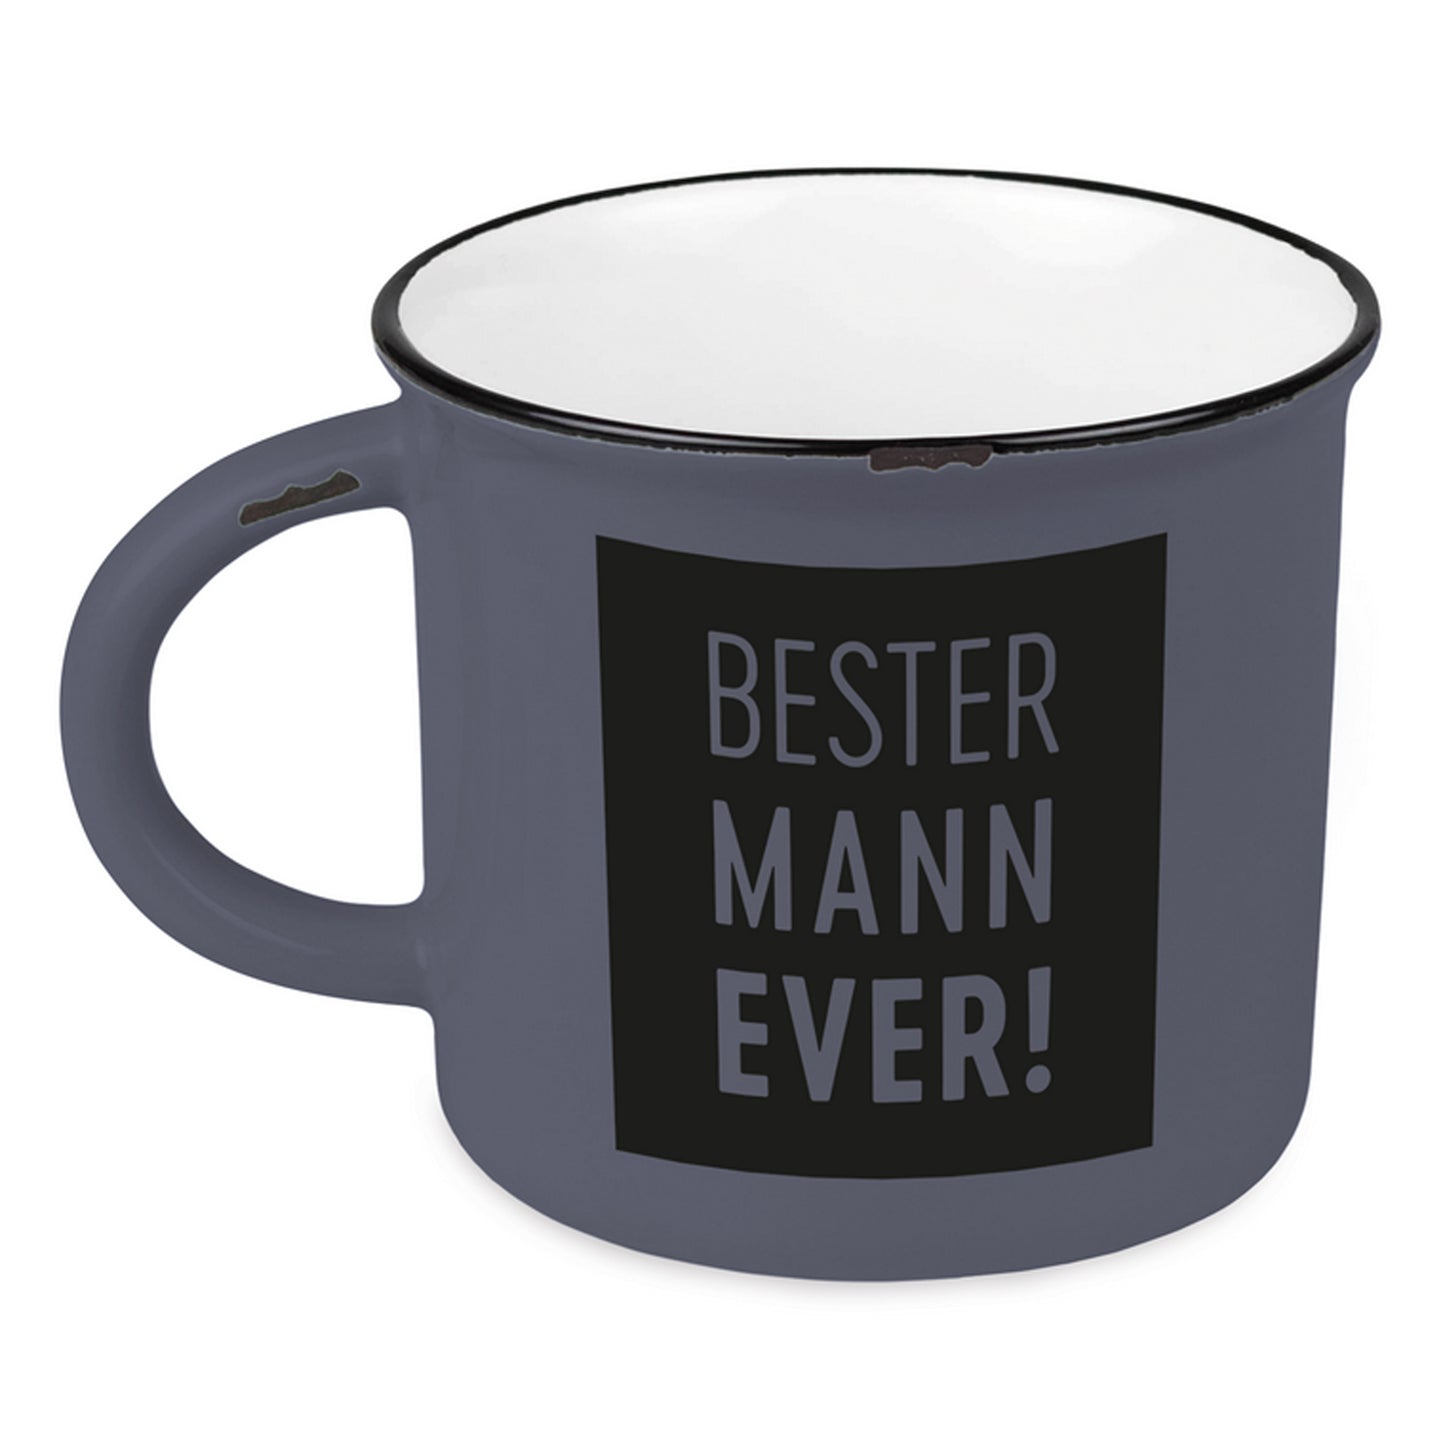 Vintage Becher -Bester Mann ever!